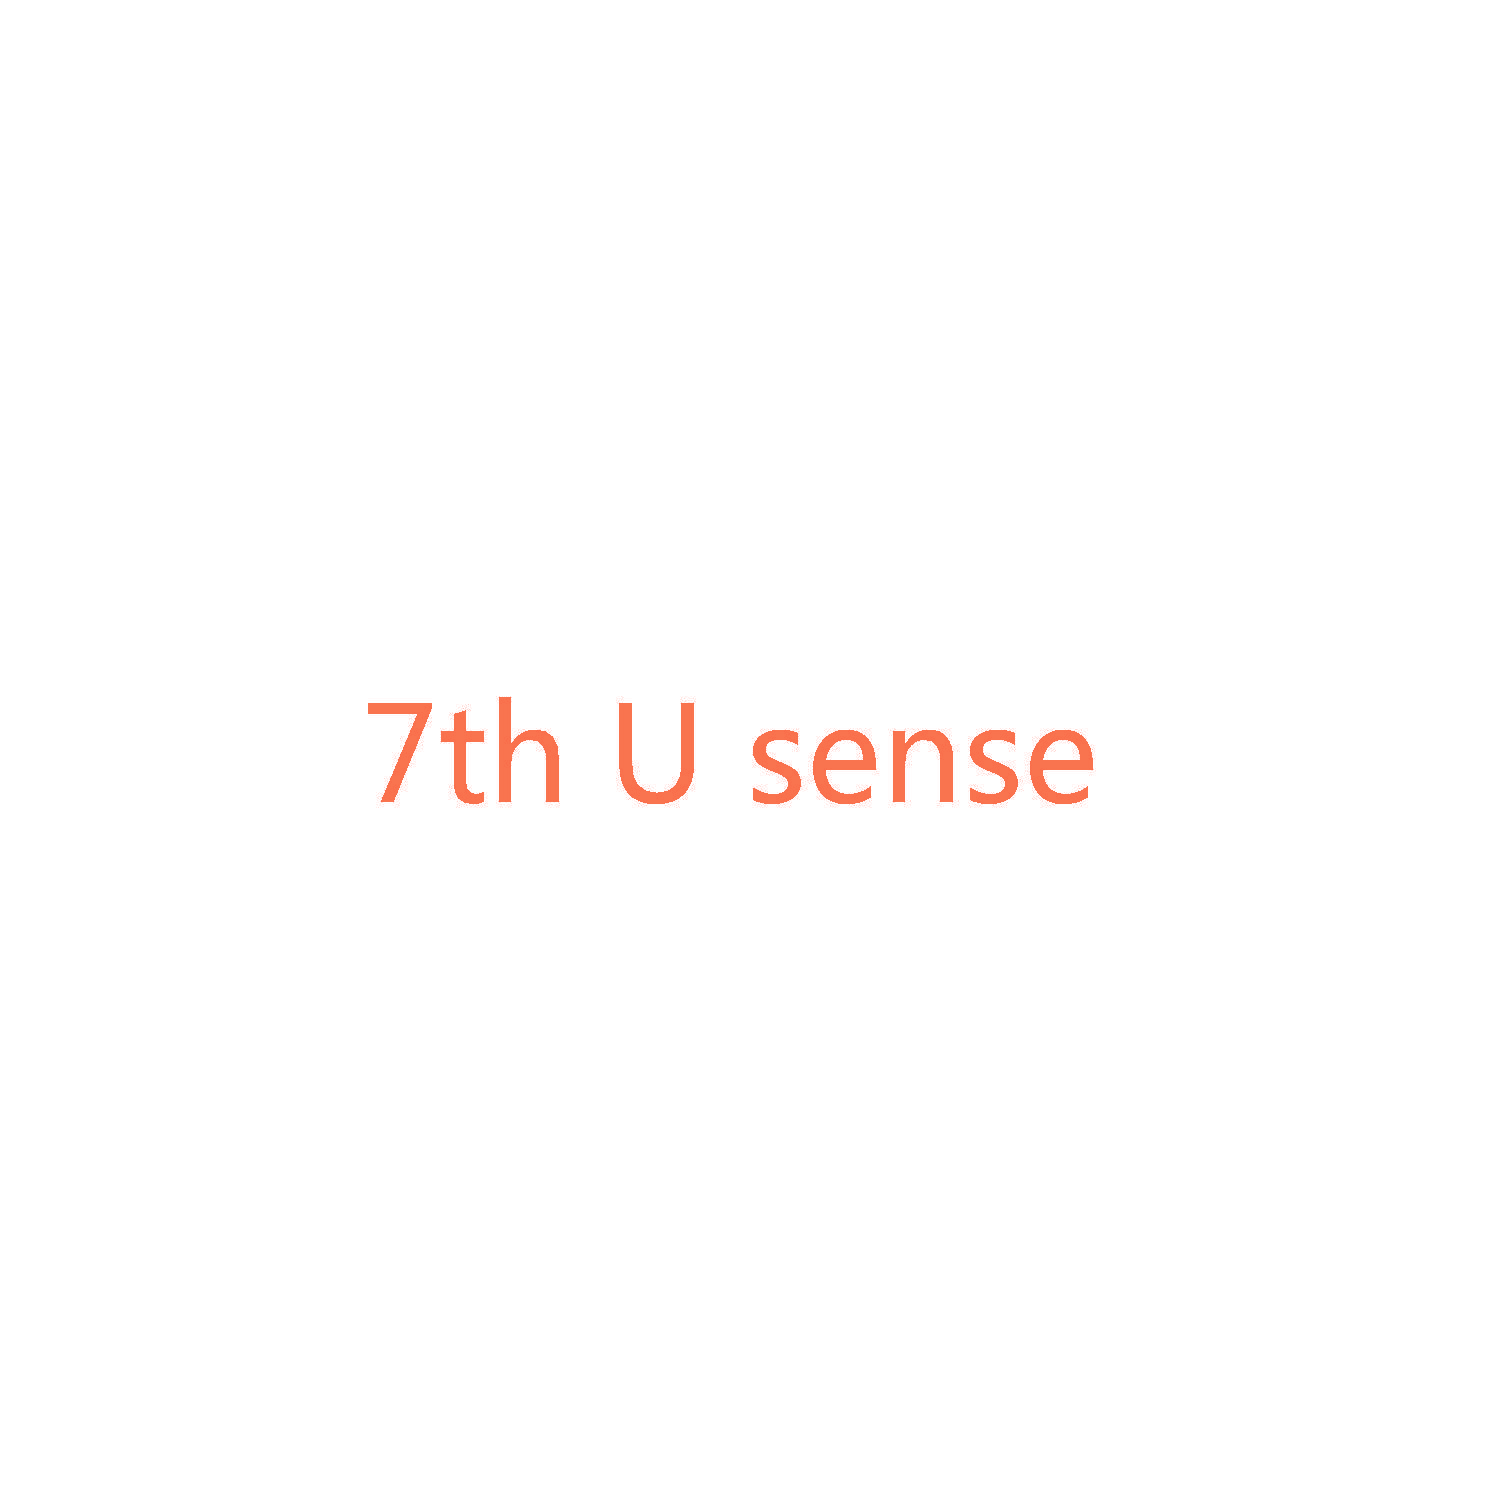 7th U sense